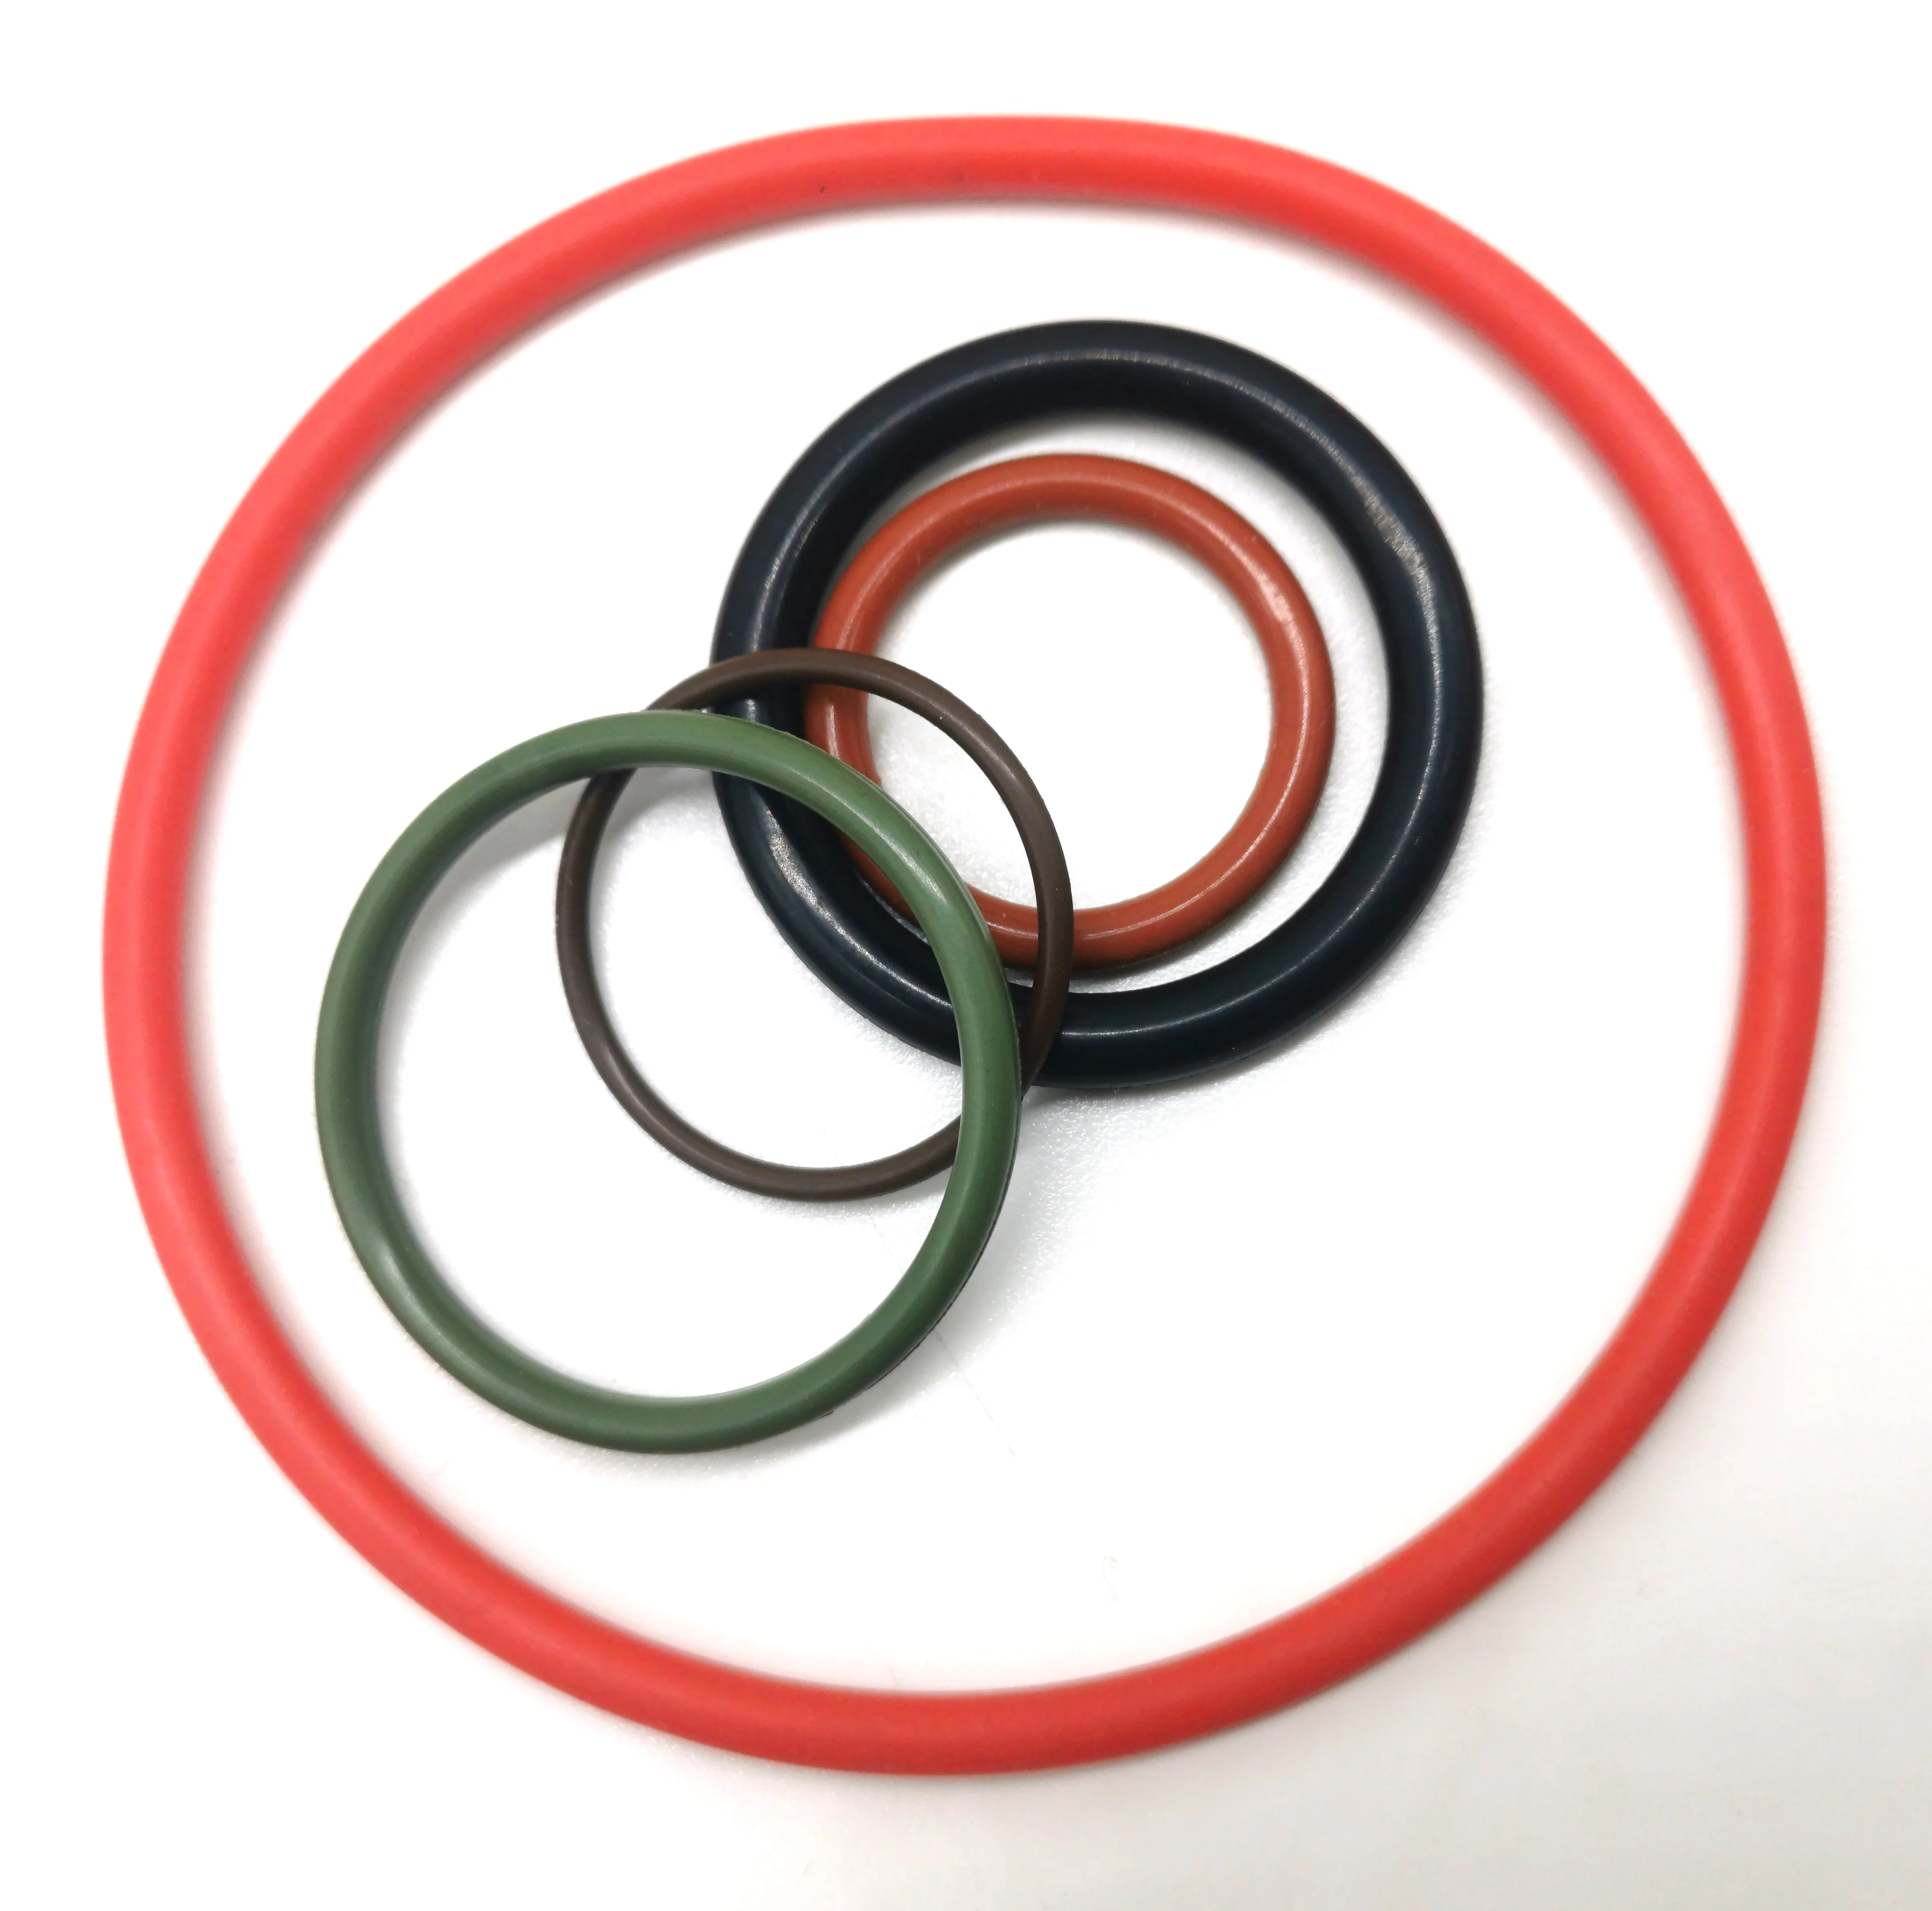 O-ring /nbr Fkm Epdm Vmq Silicone O-ring Rubber Oring Seal